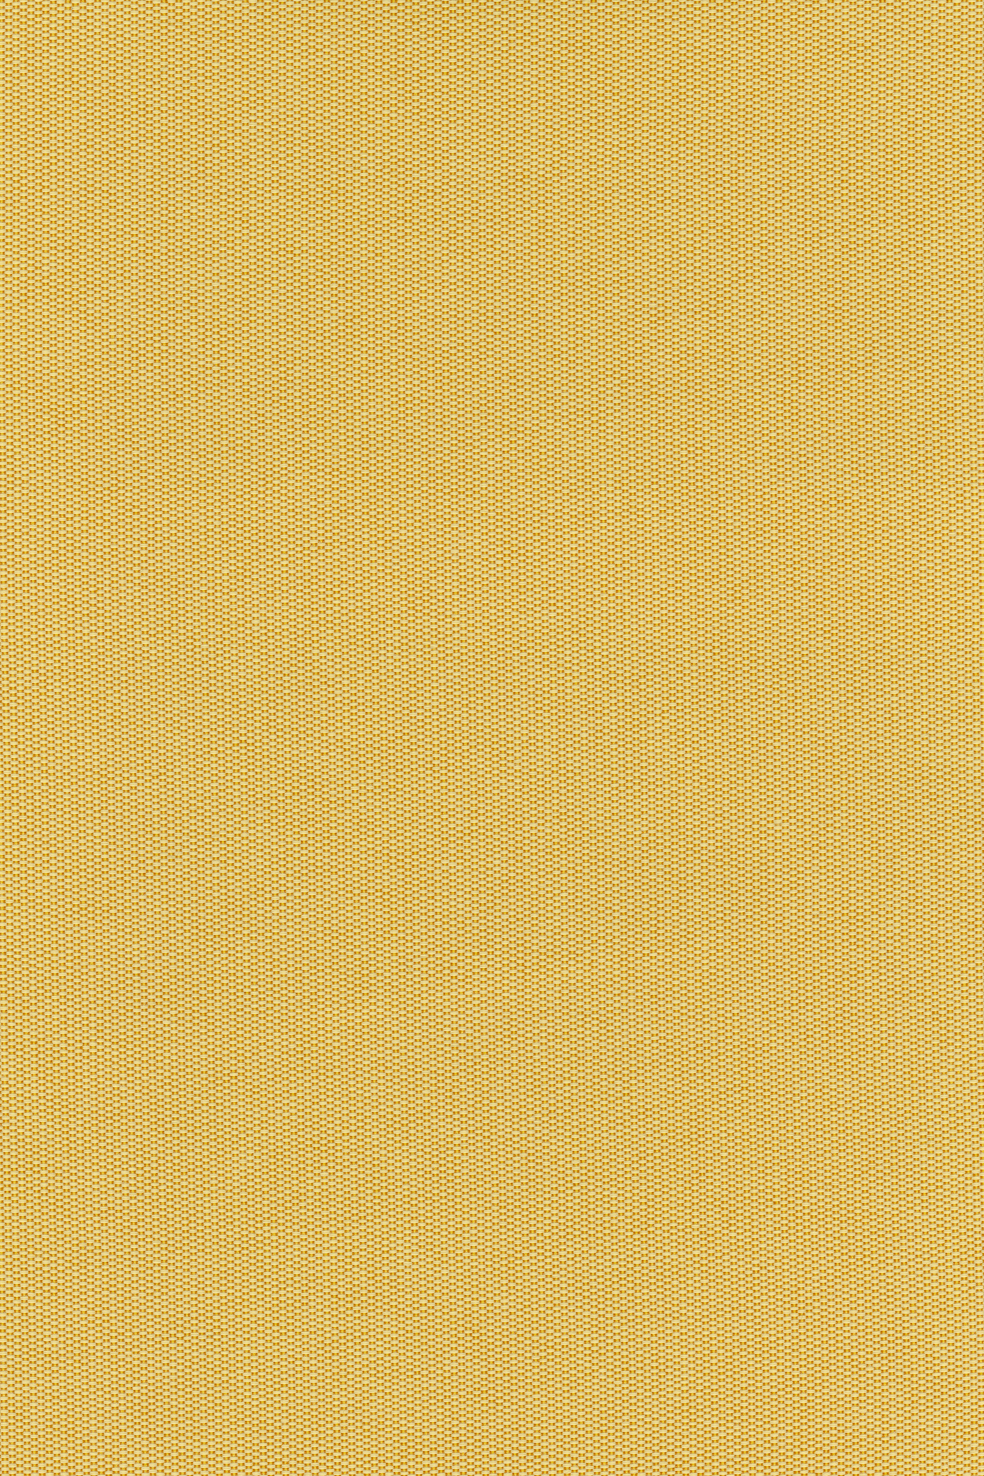 Fabric sample Patio Outdoor 440 yellow